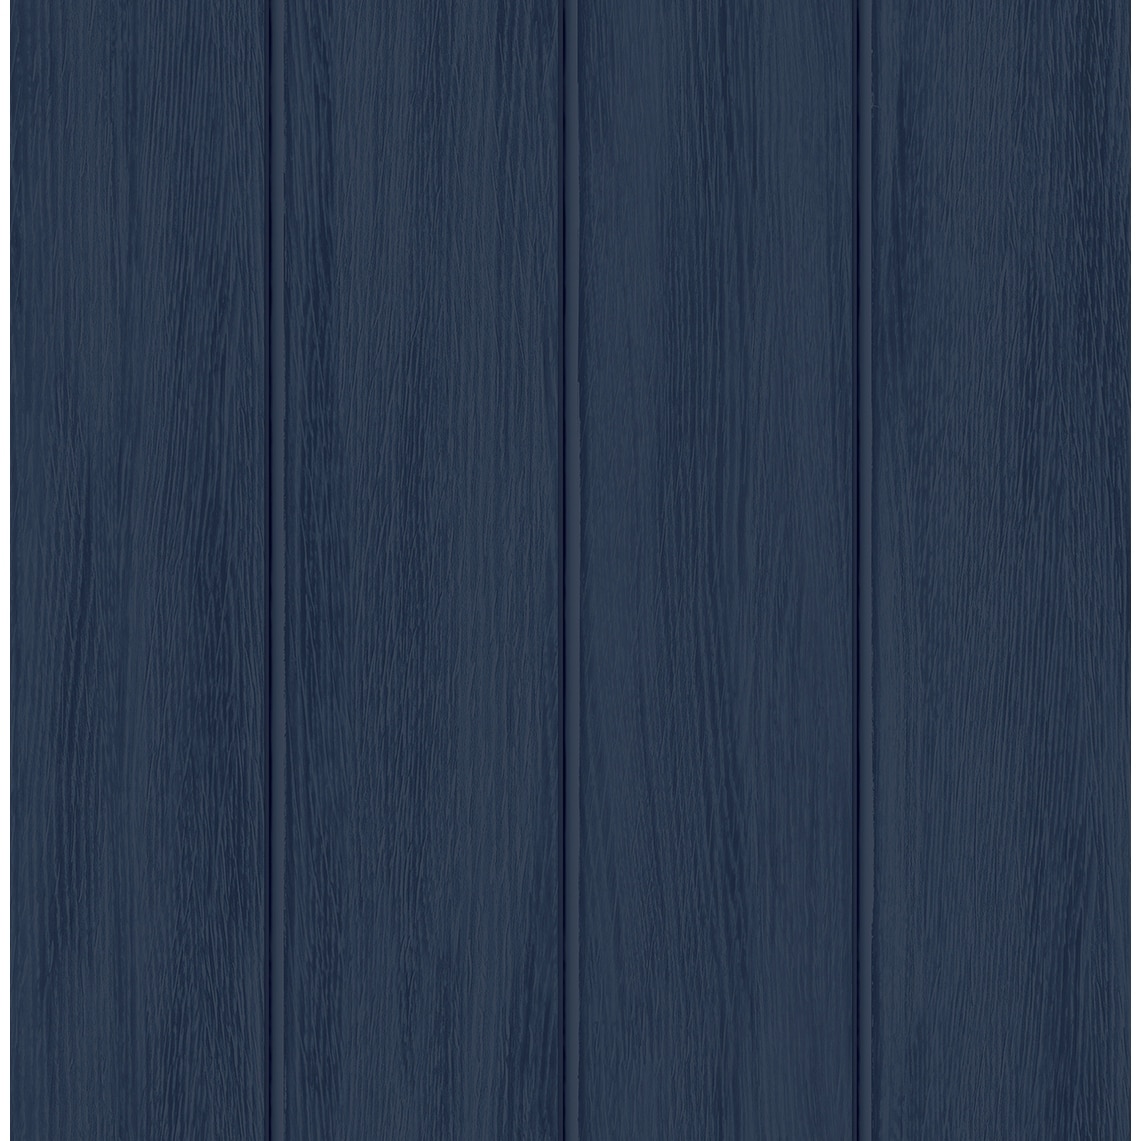 Chevron Wood Panel wallpaper in navy blue